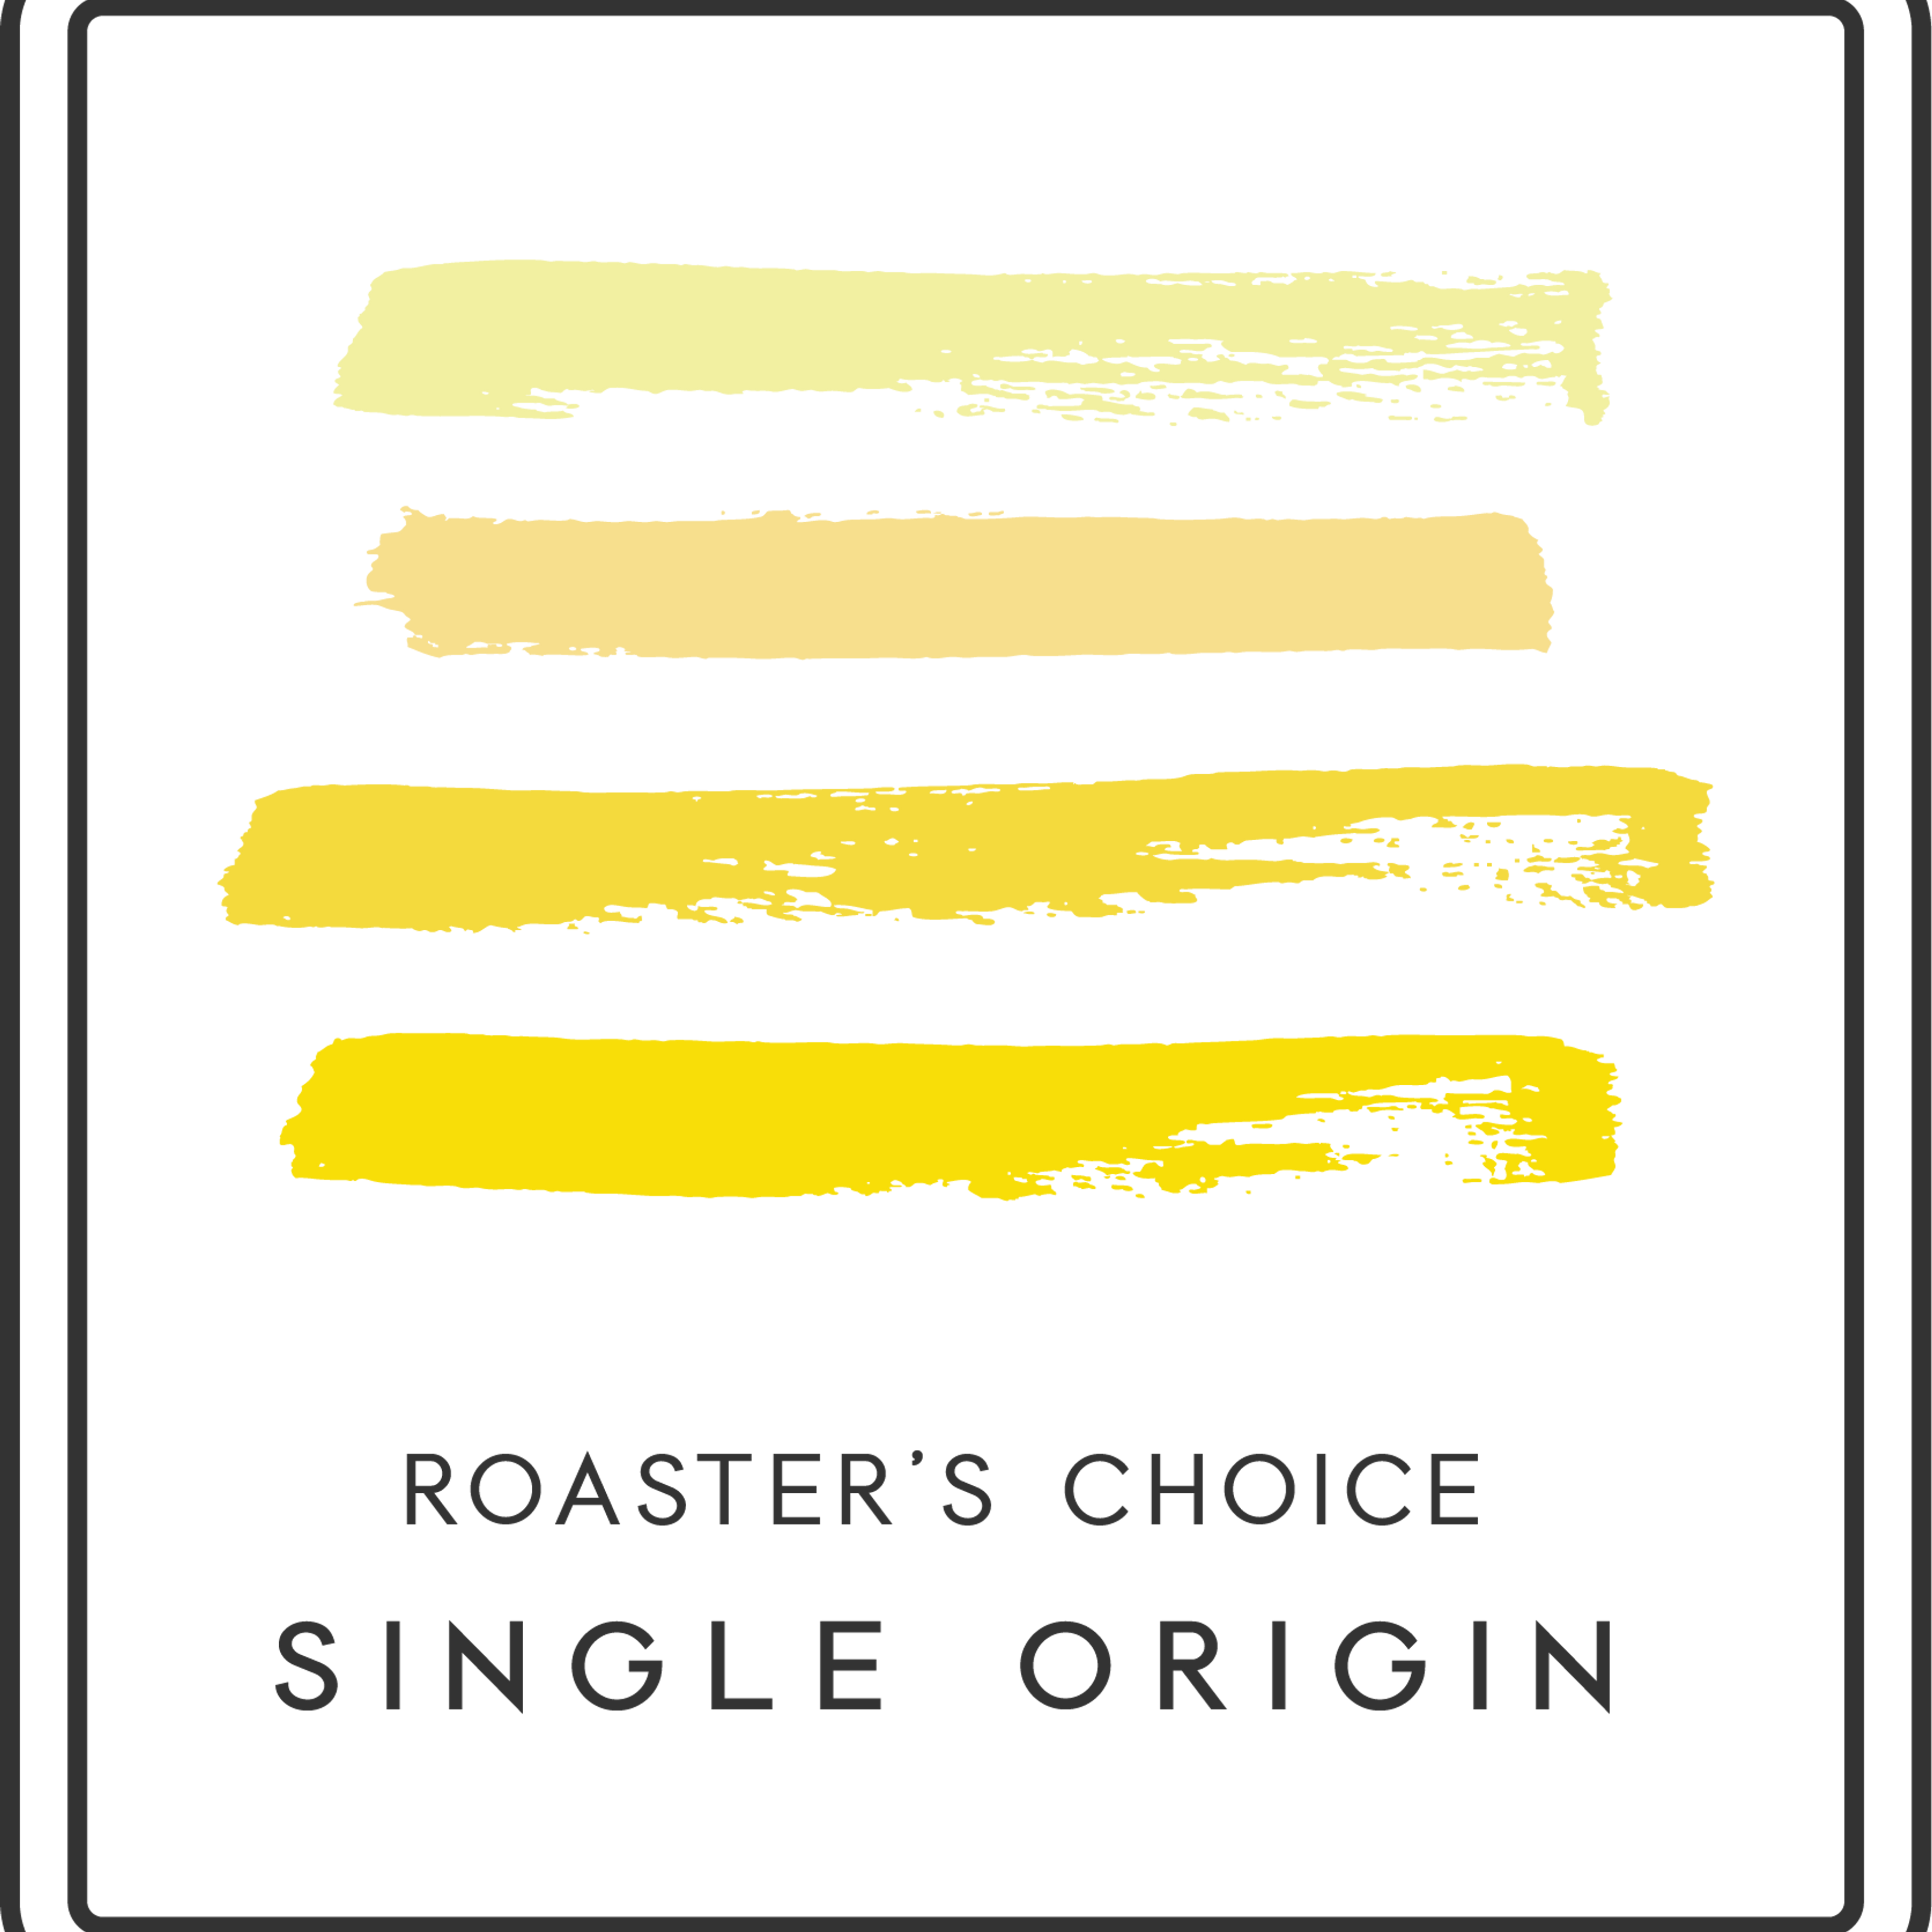 Roasters Choice: Single Origin